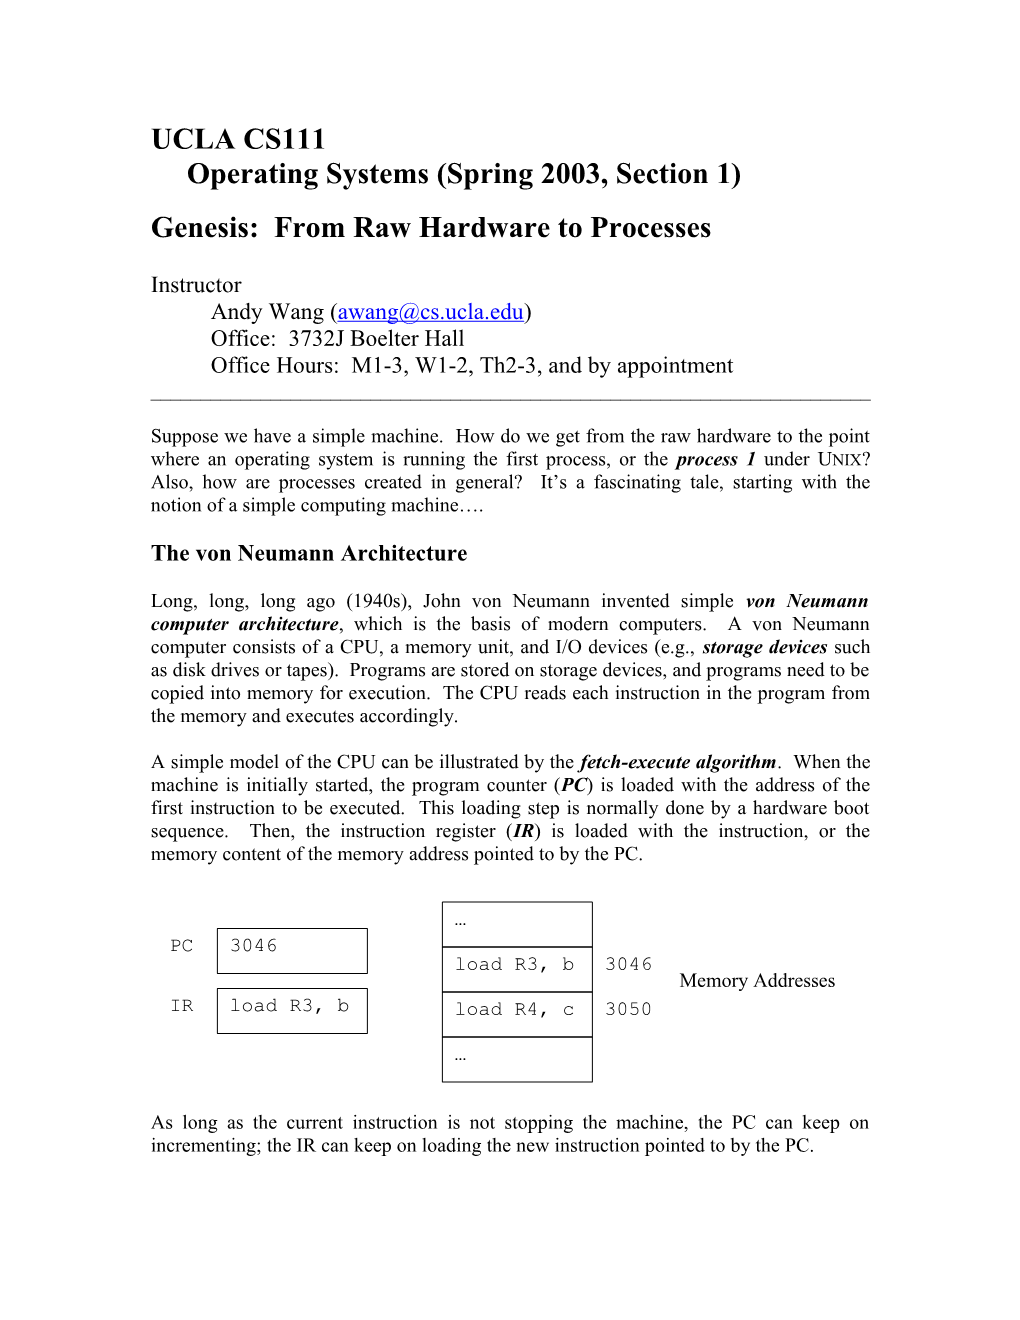 CS111 Operating System Principles